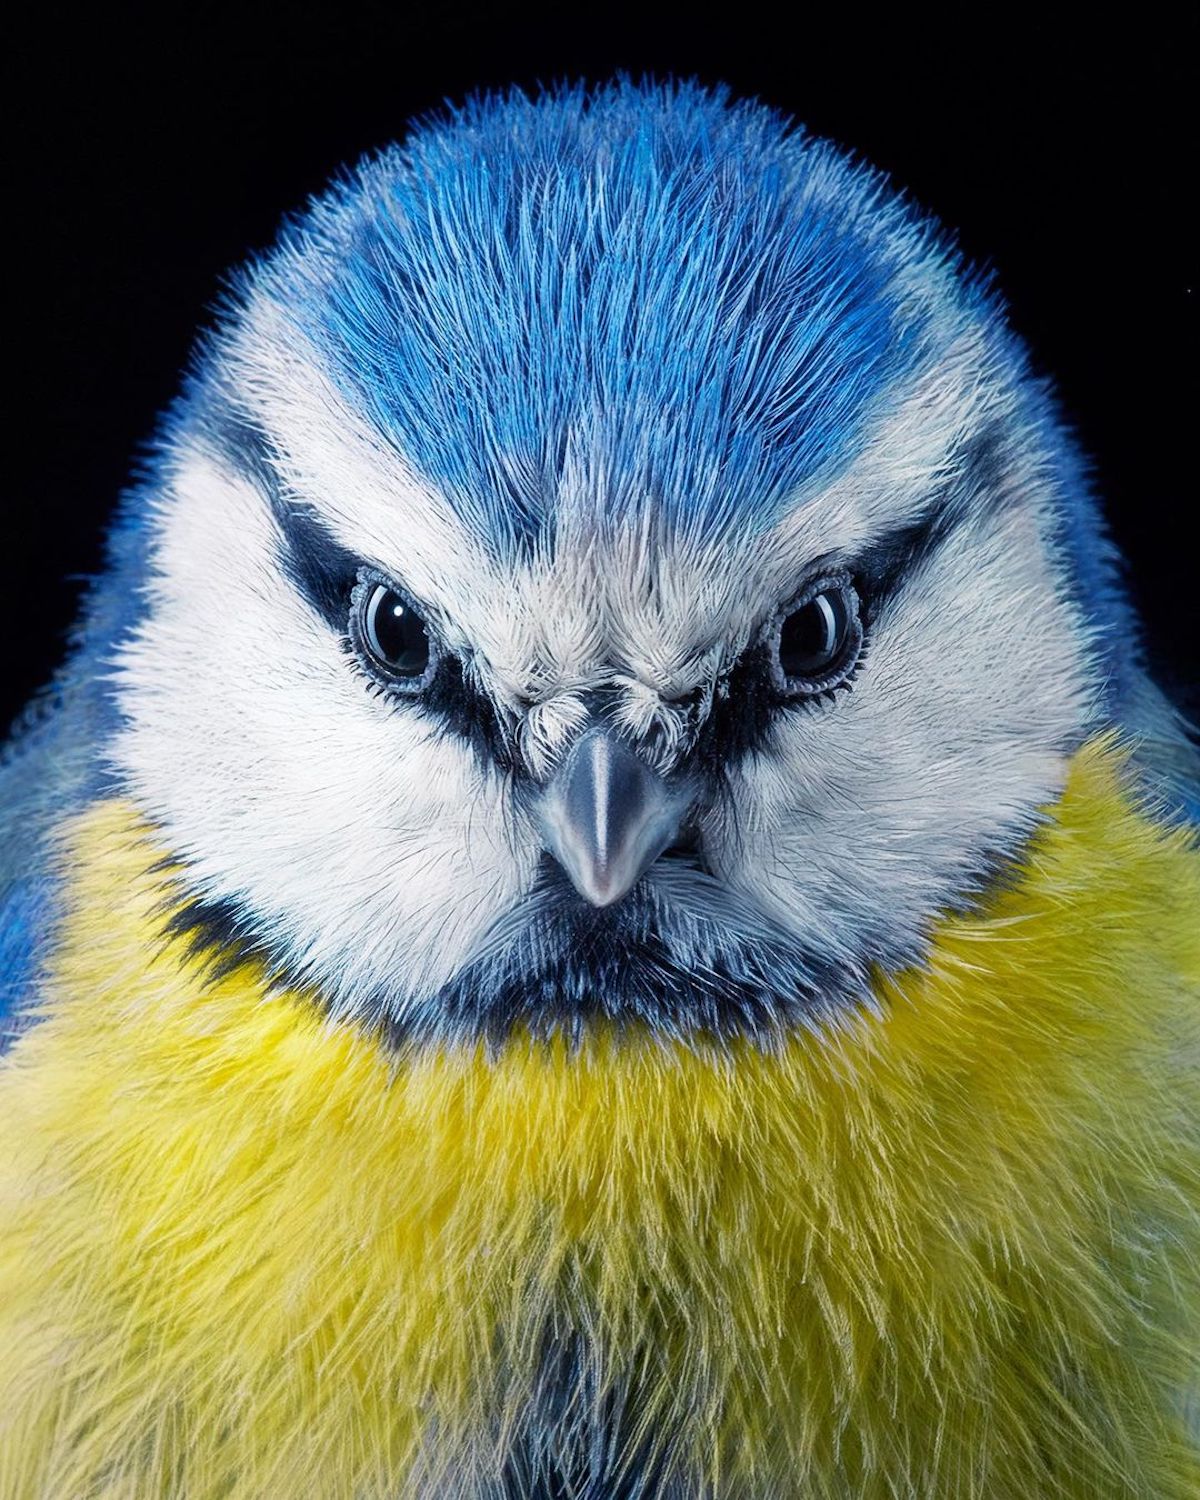 Photo of a Bird by Tim Flach